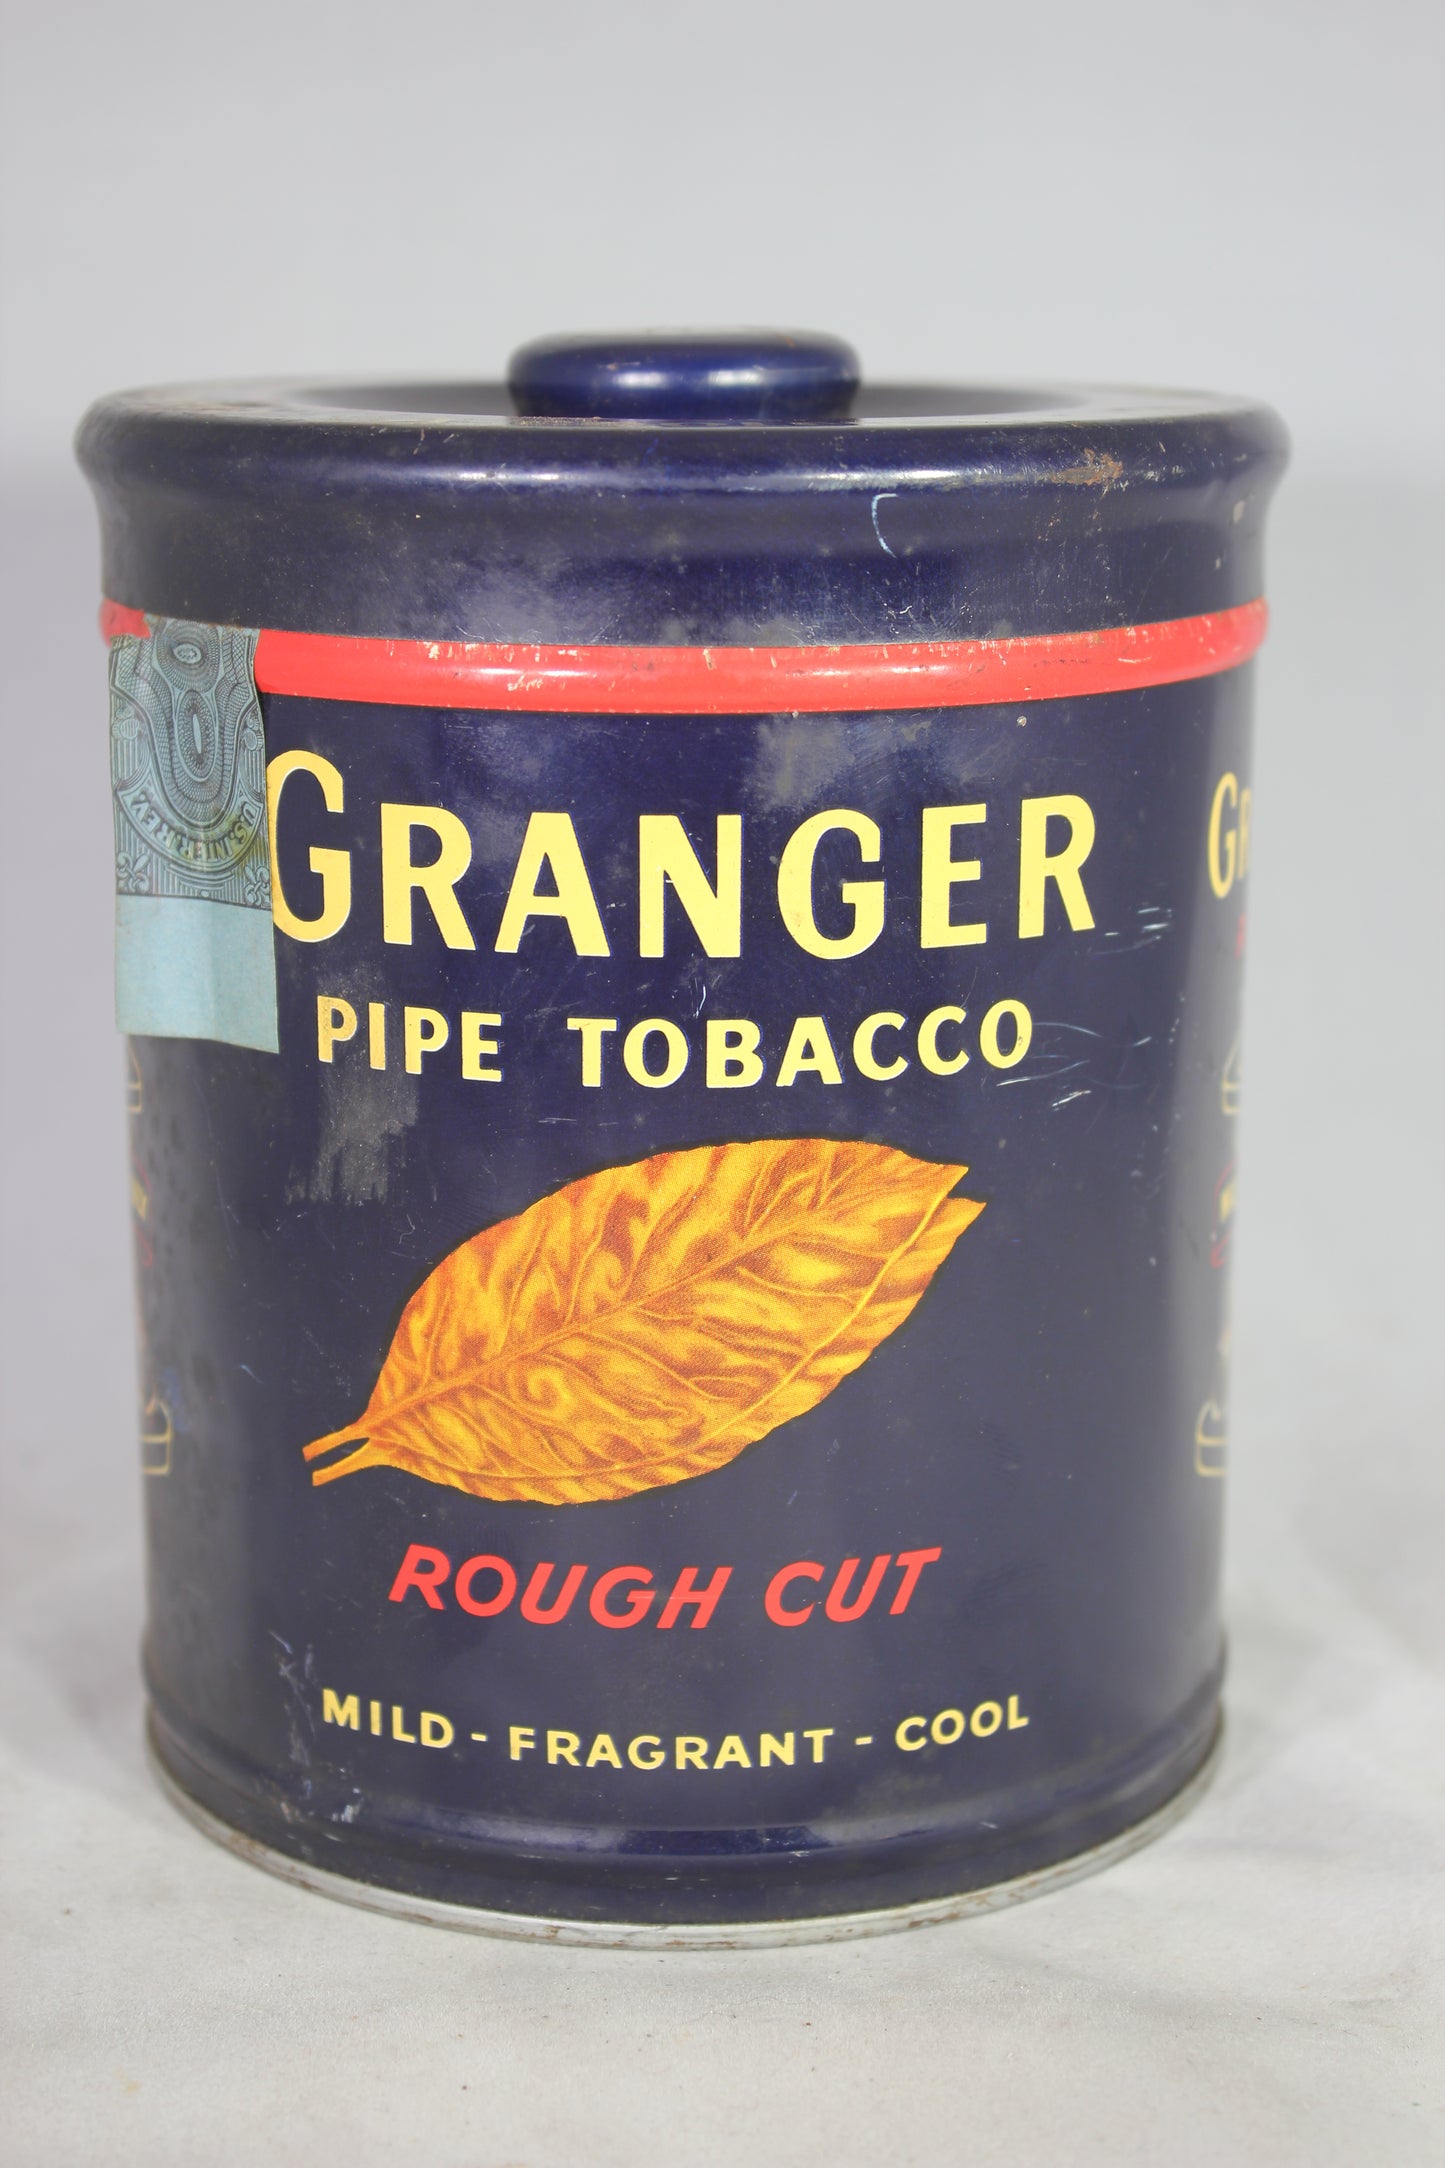 Granger Pipe Tobacco Tin by Liggett & Myer's Tobacco Co.